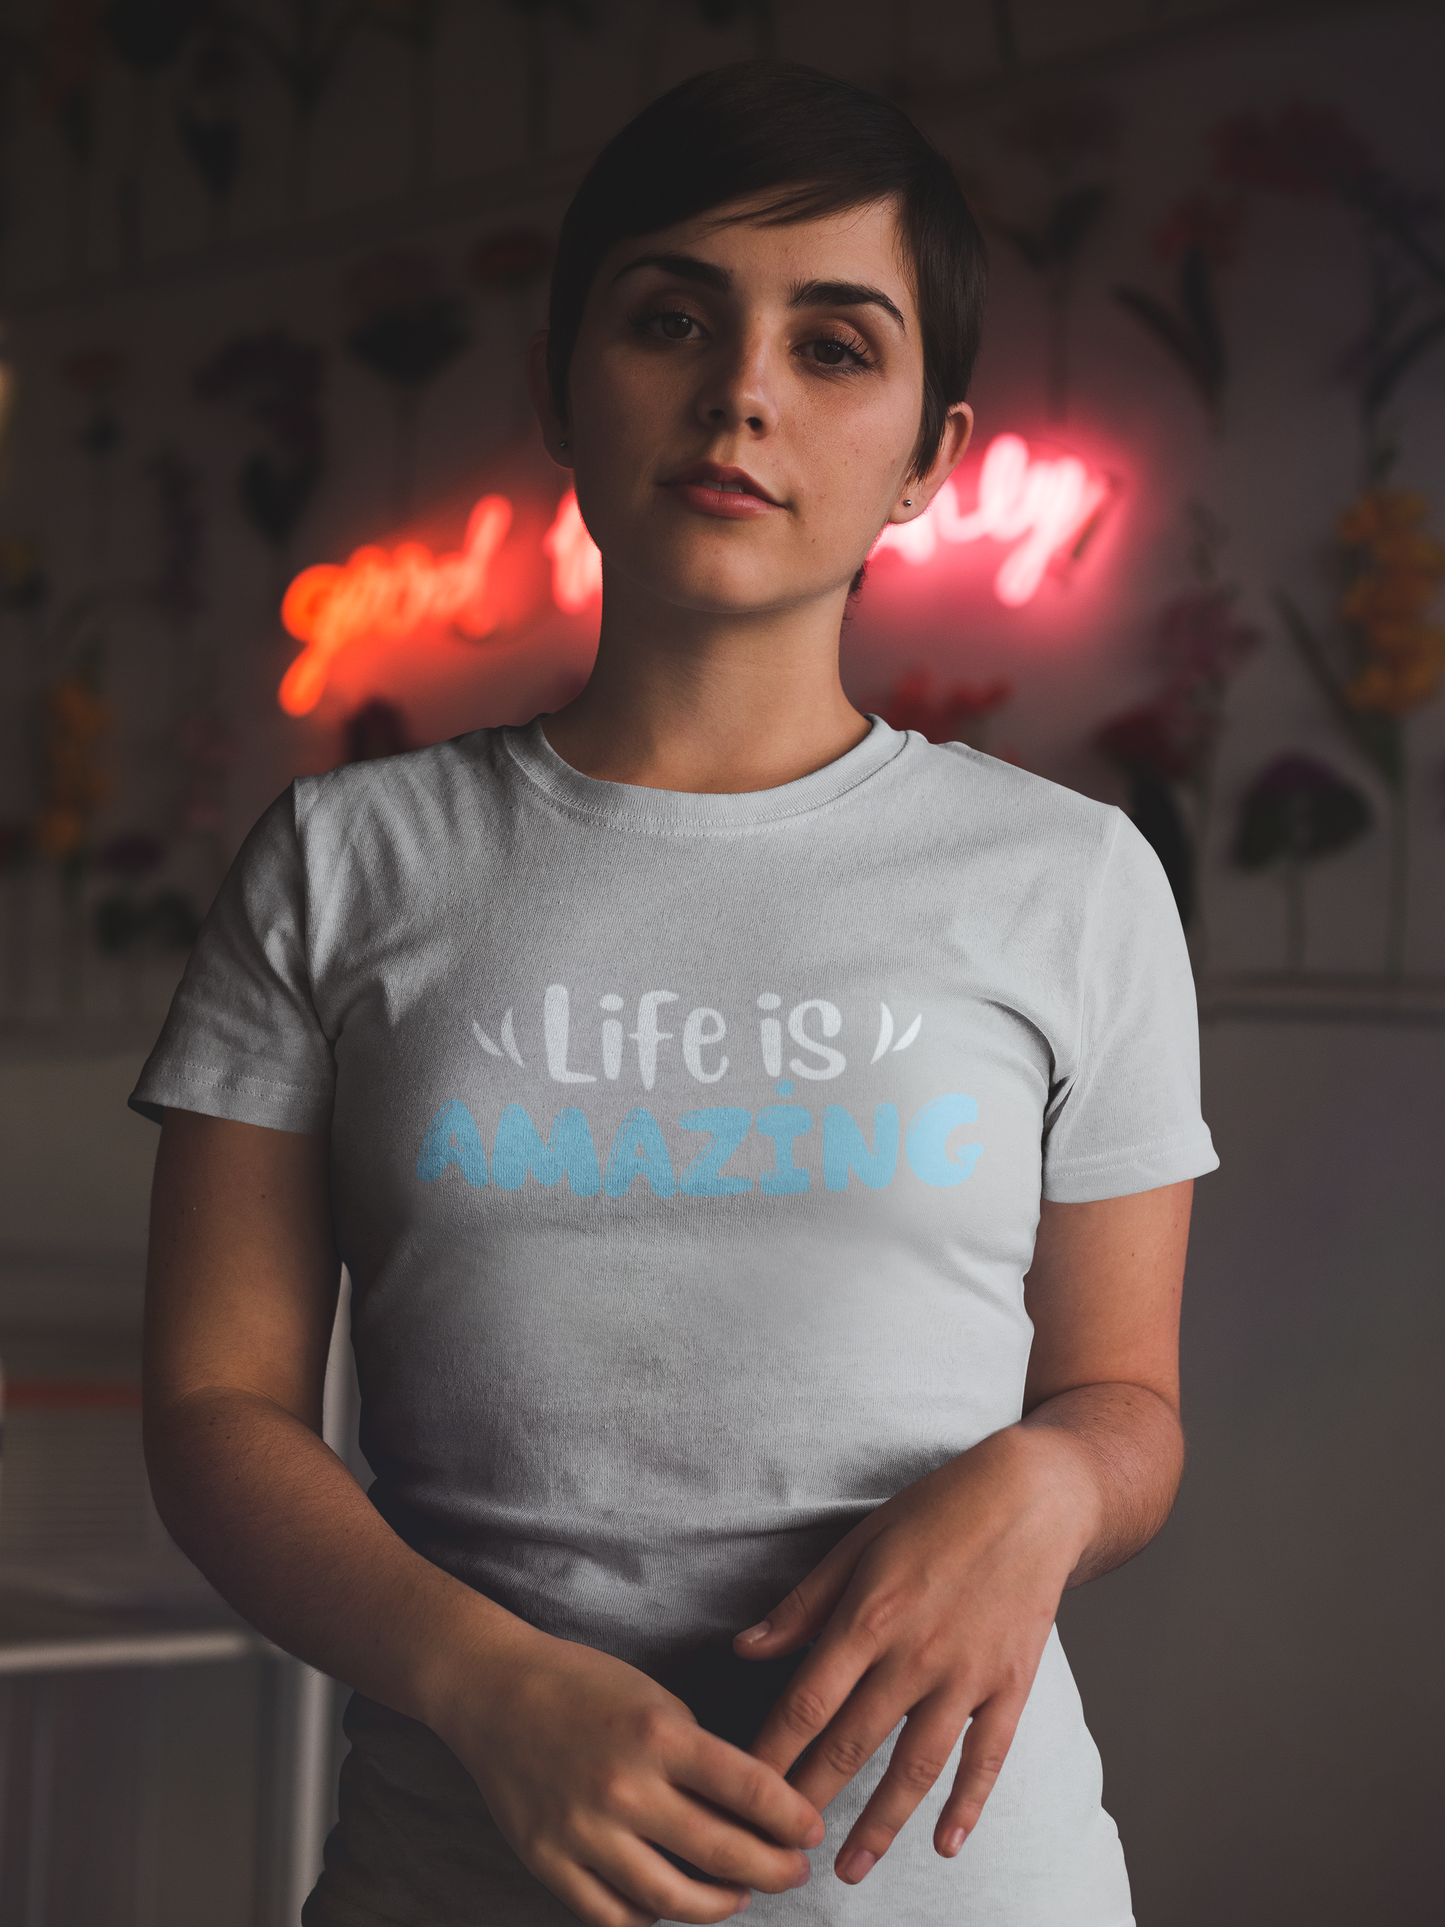 Life is Amazing Women's Premium Tee, Amazing shirts, Inspirational shirts, Motivational Shirts, Positive shirts, Trendy tees